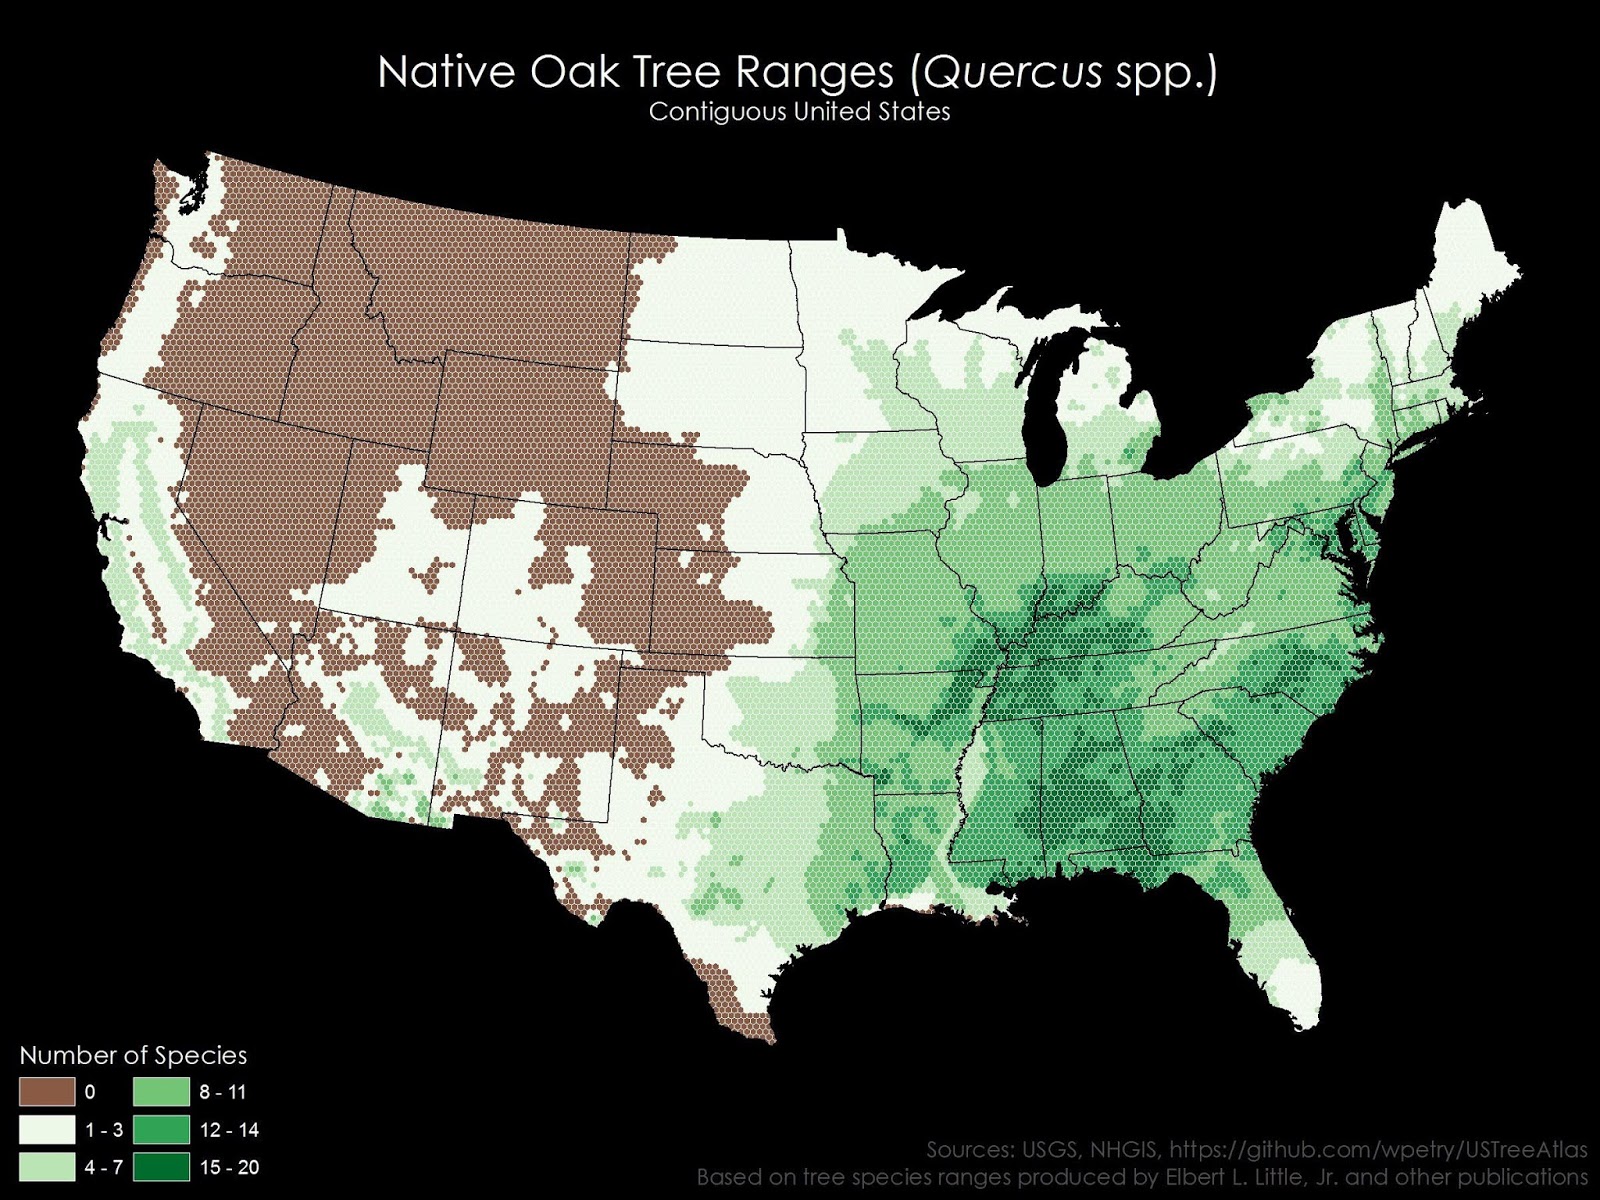 Native Oak Tree Ranges in the U.S.